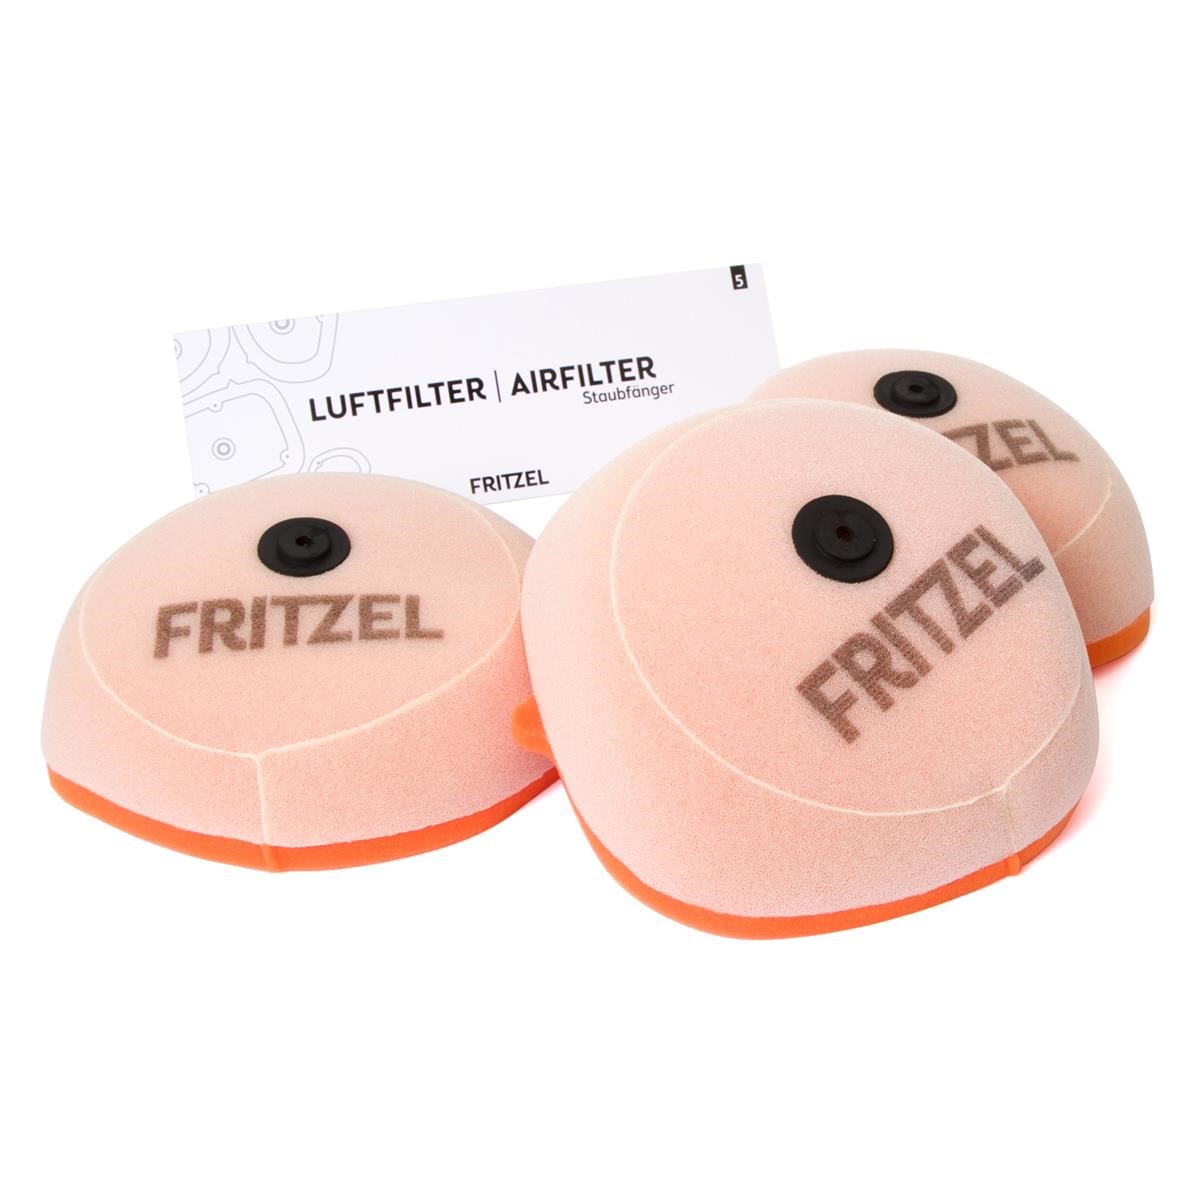 FRITZEL Air Filter Set Staubfänger 3 Pieces, KTM SX/SX-F/EXC/EXC-F, Husaberg TE